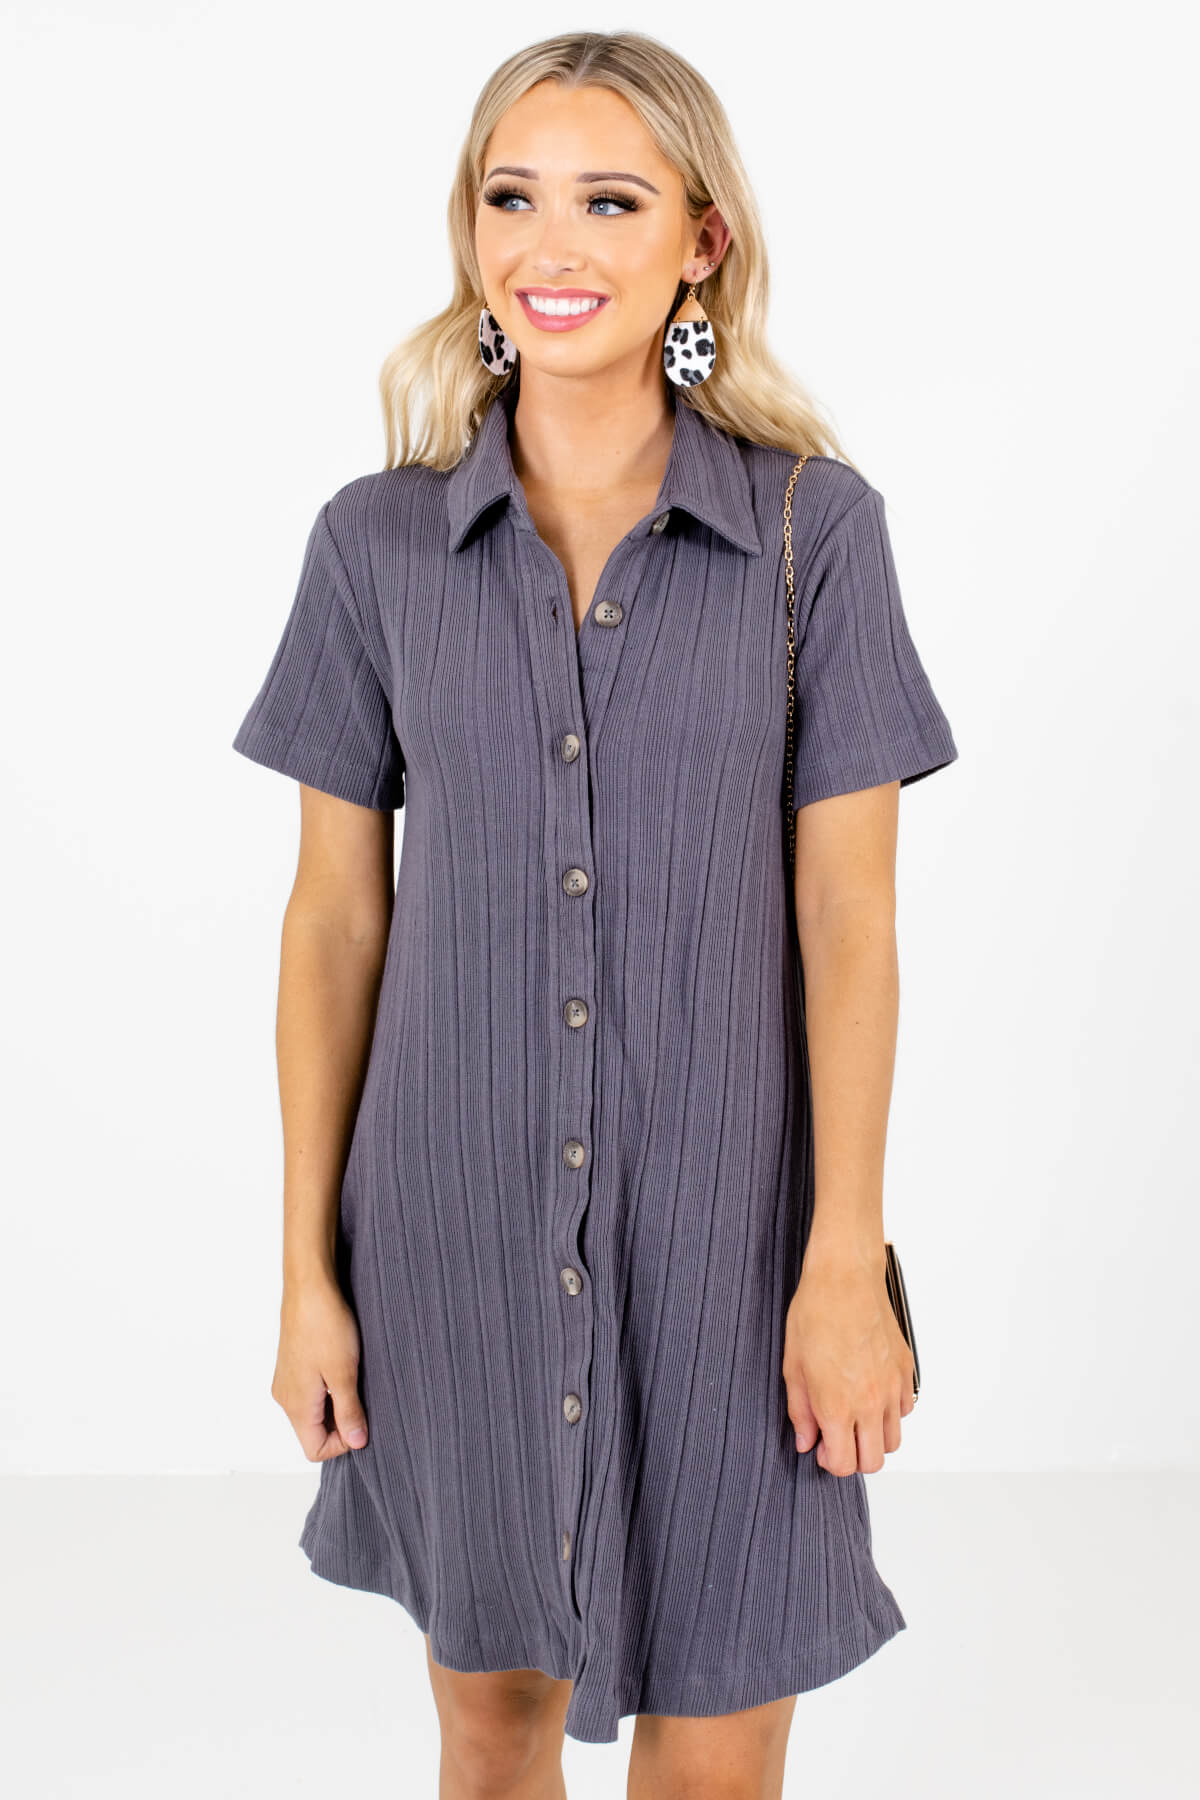 Slate Gray Button-Up Front Boutique Mini Dresses for Women